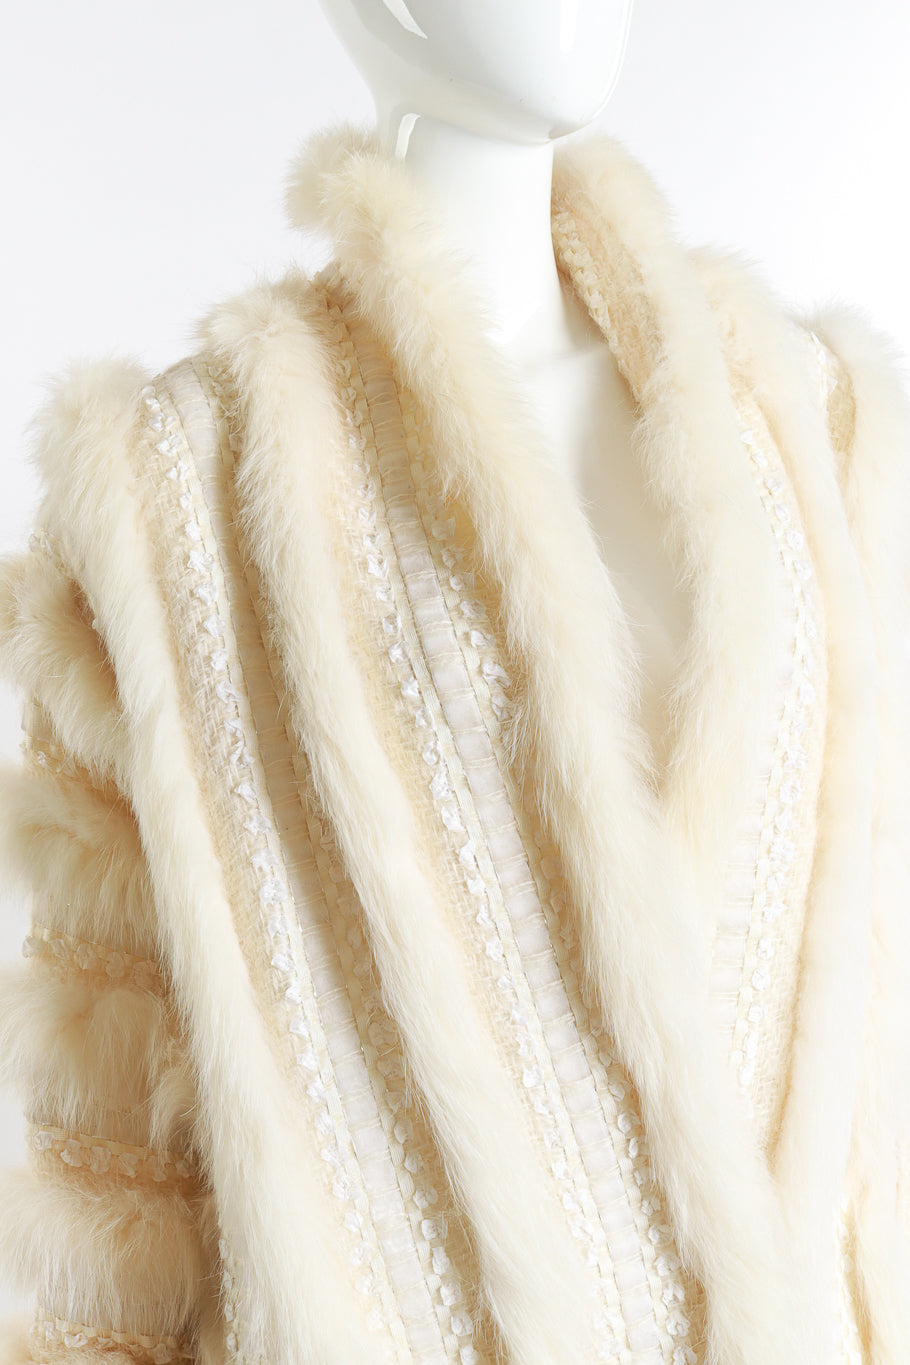 Ribbon Stripe Fur Coat by Schjelde front detail mannequin @RECESS LA